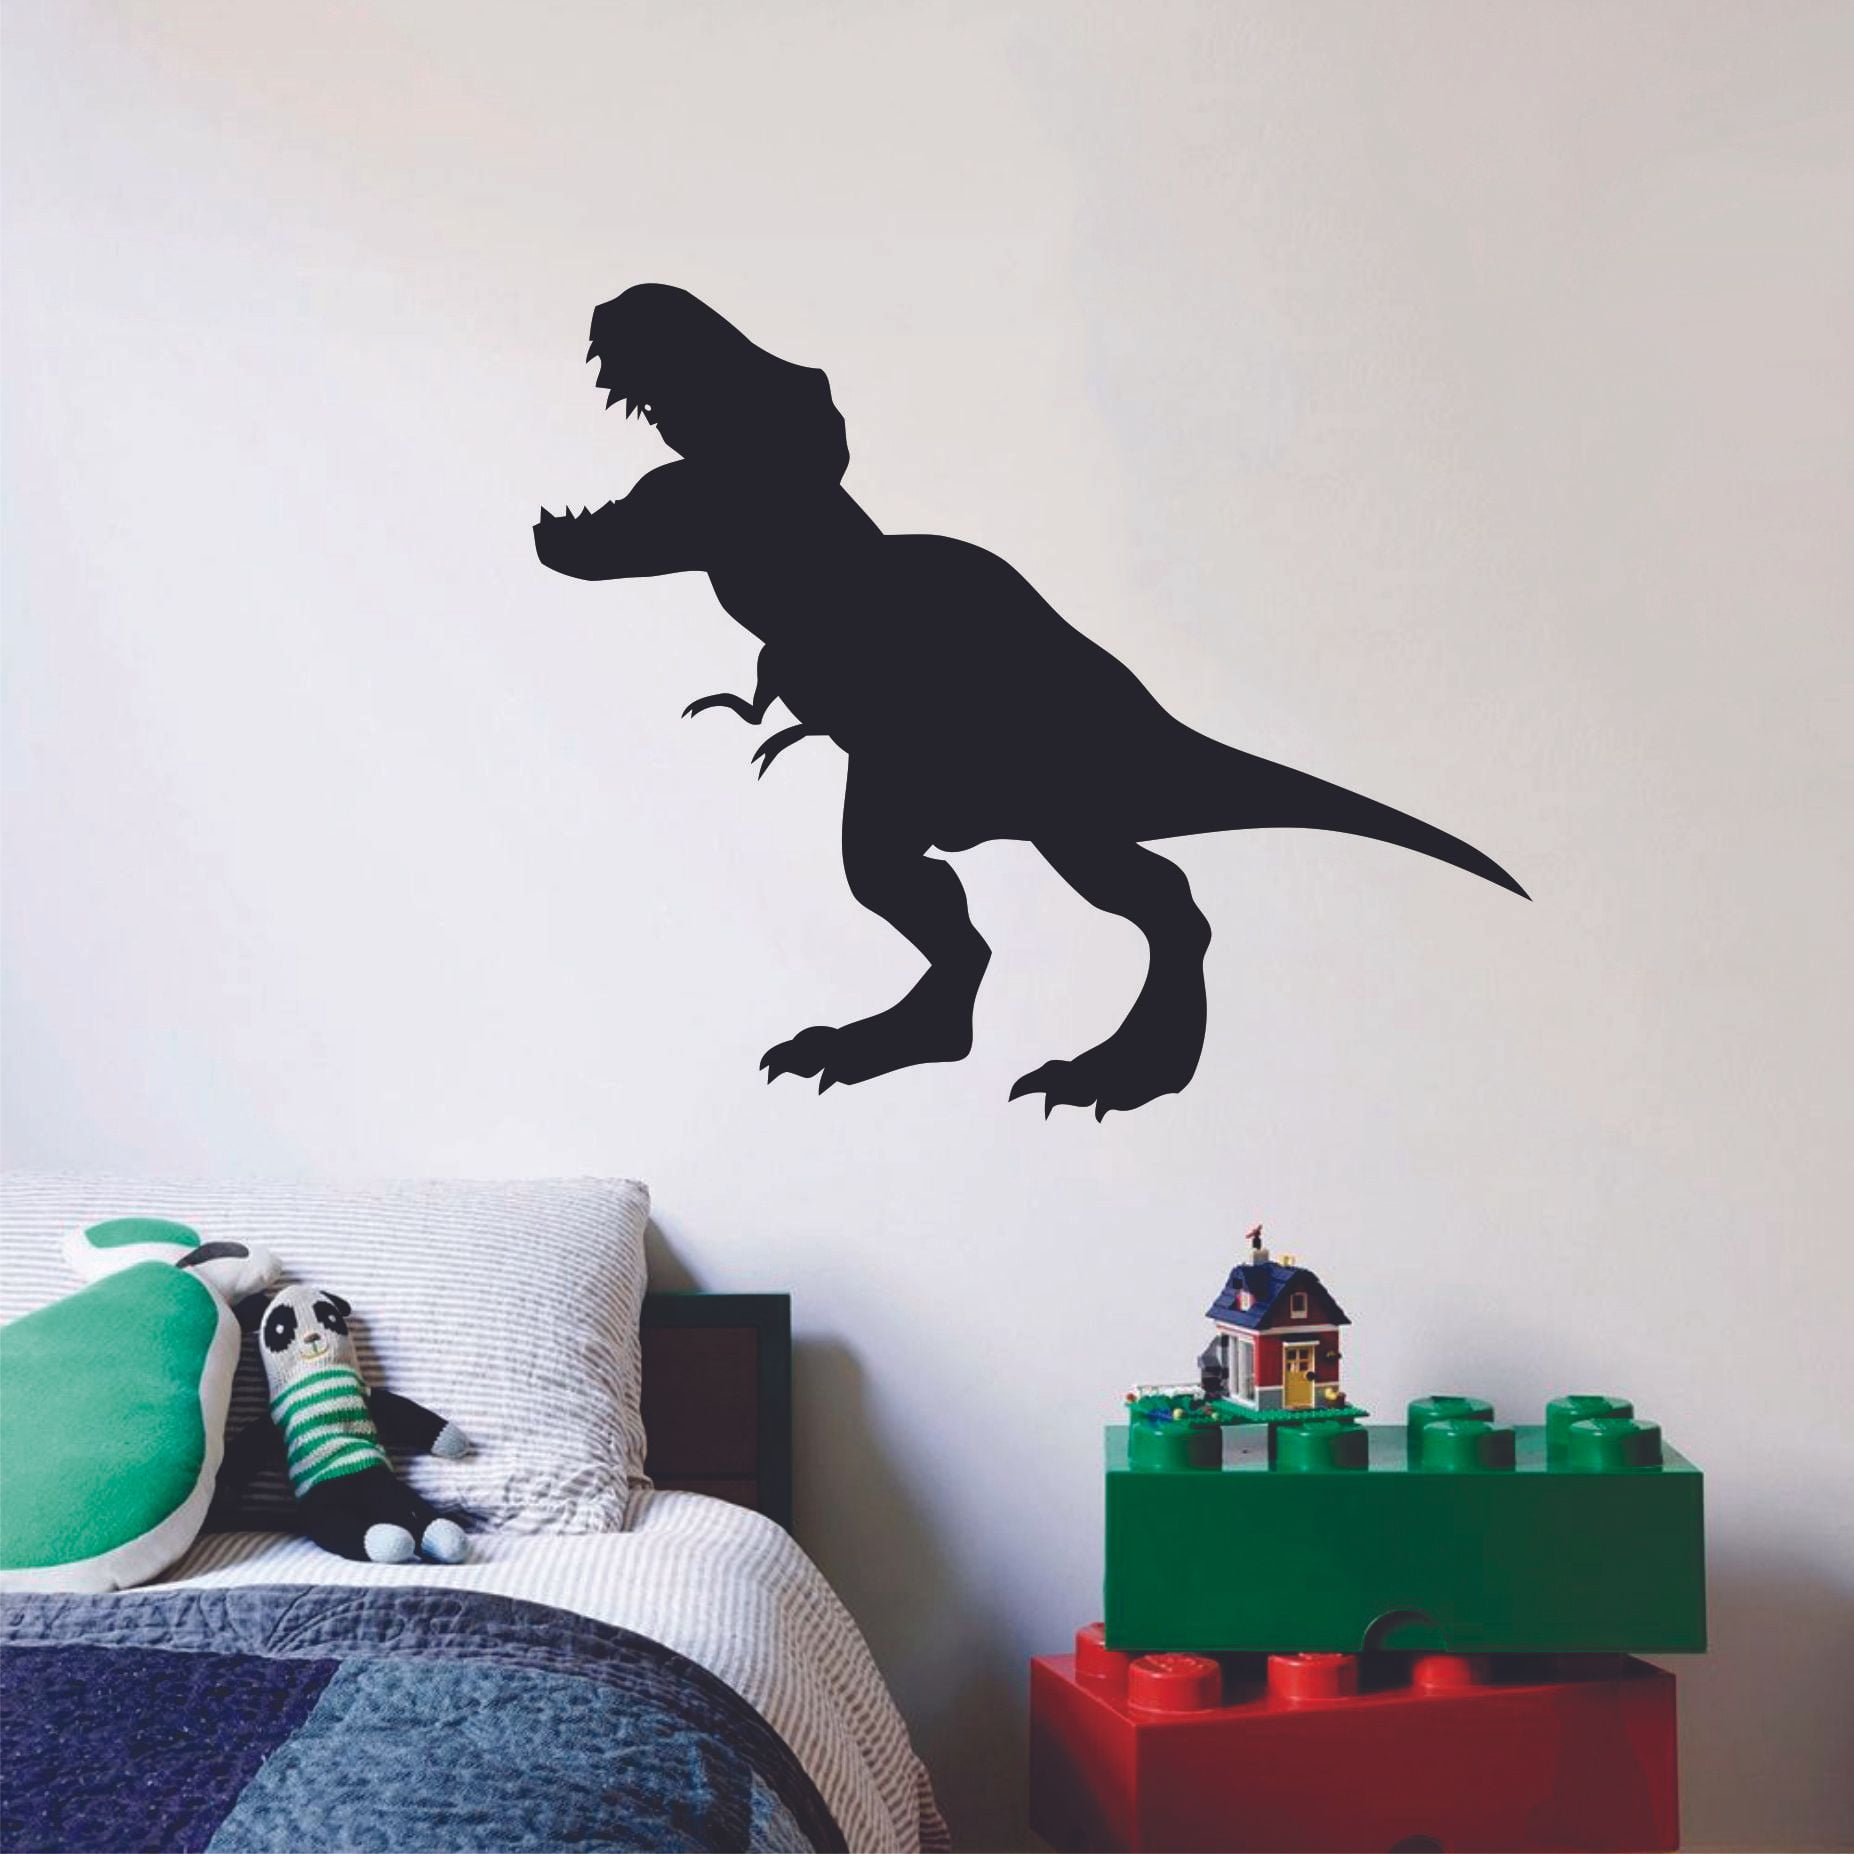 Rex kids boy decal decor Nursery Wall Stickers Dinosaur large Jurassic World T 